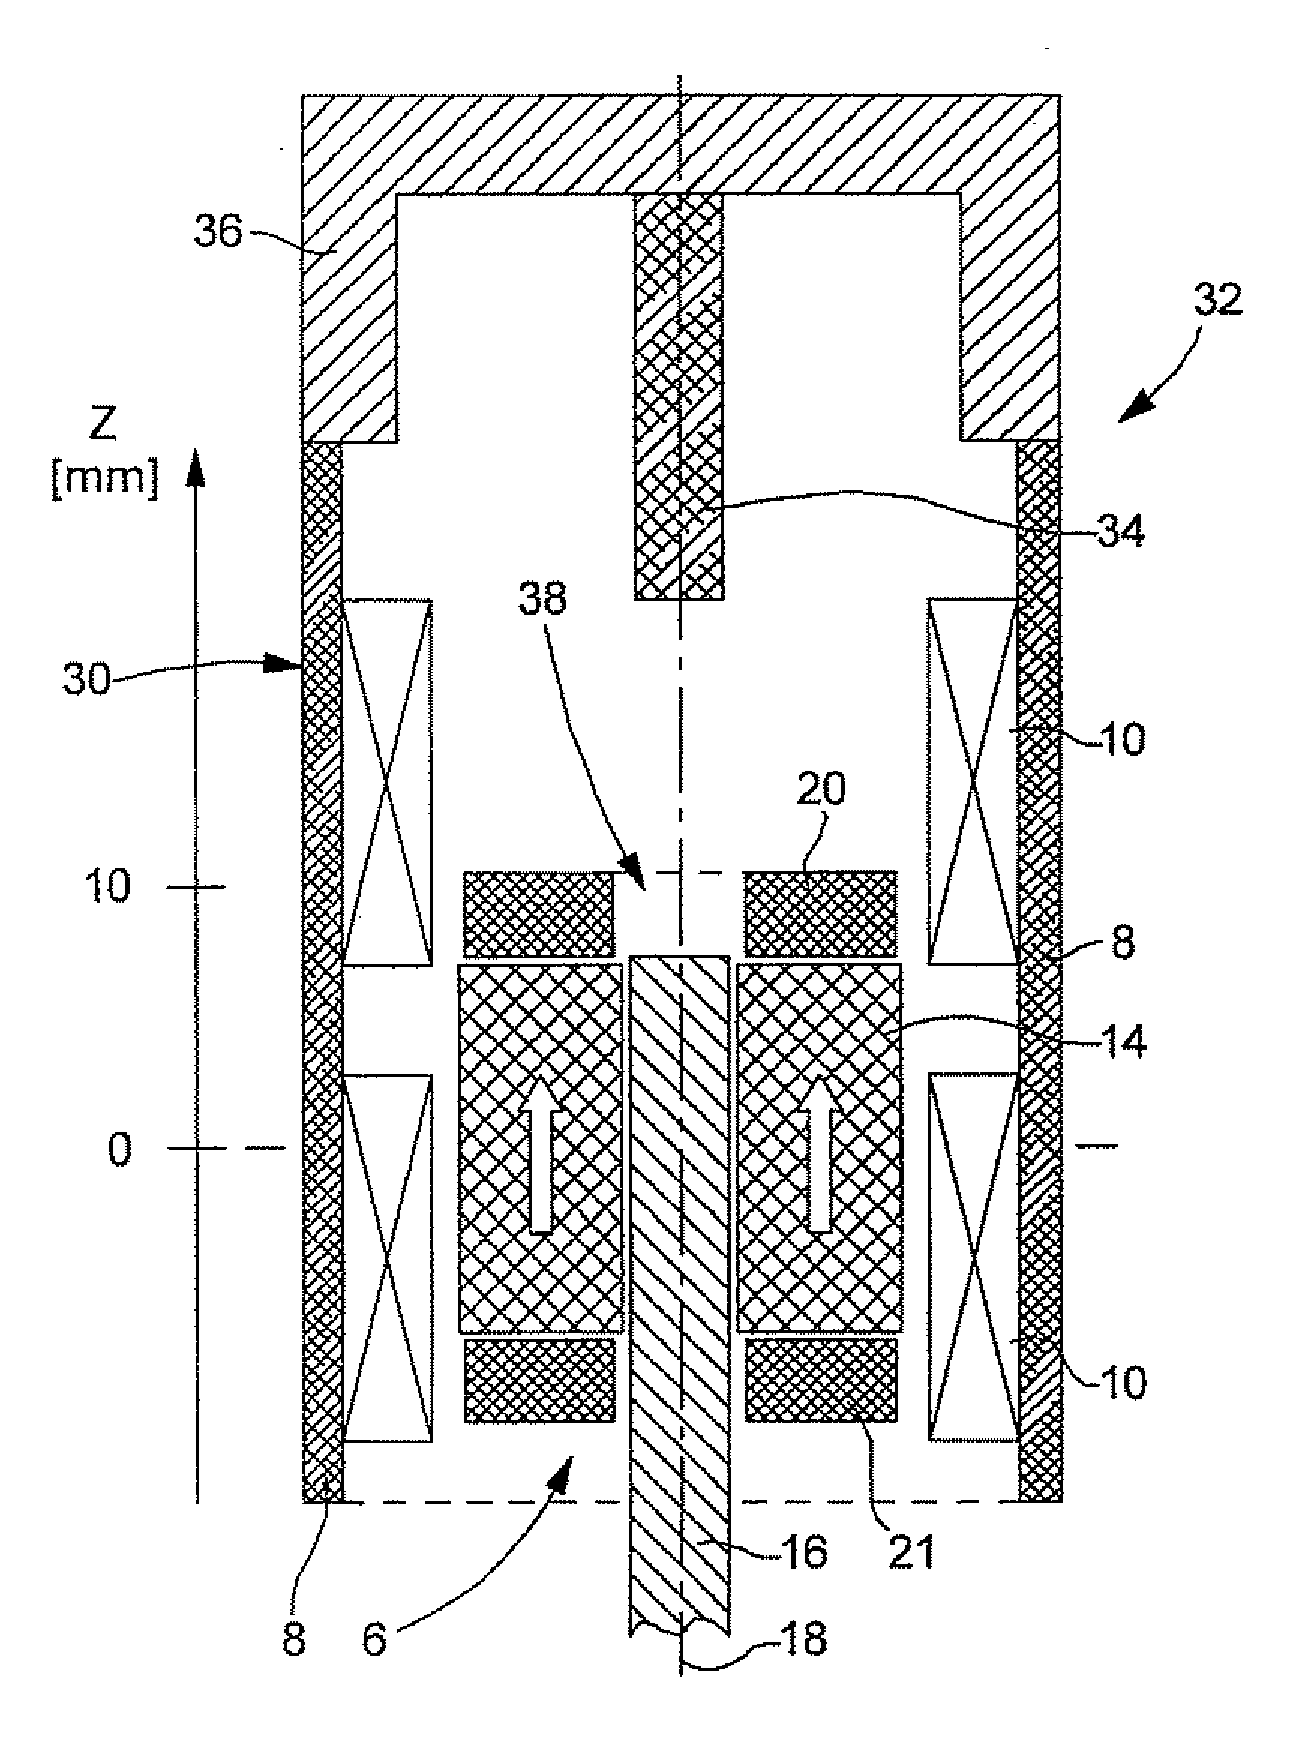 Vertical actuator having a gravity compensation device